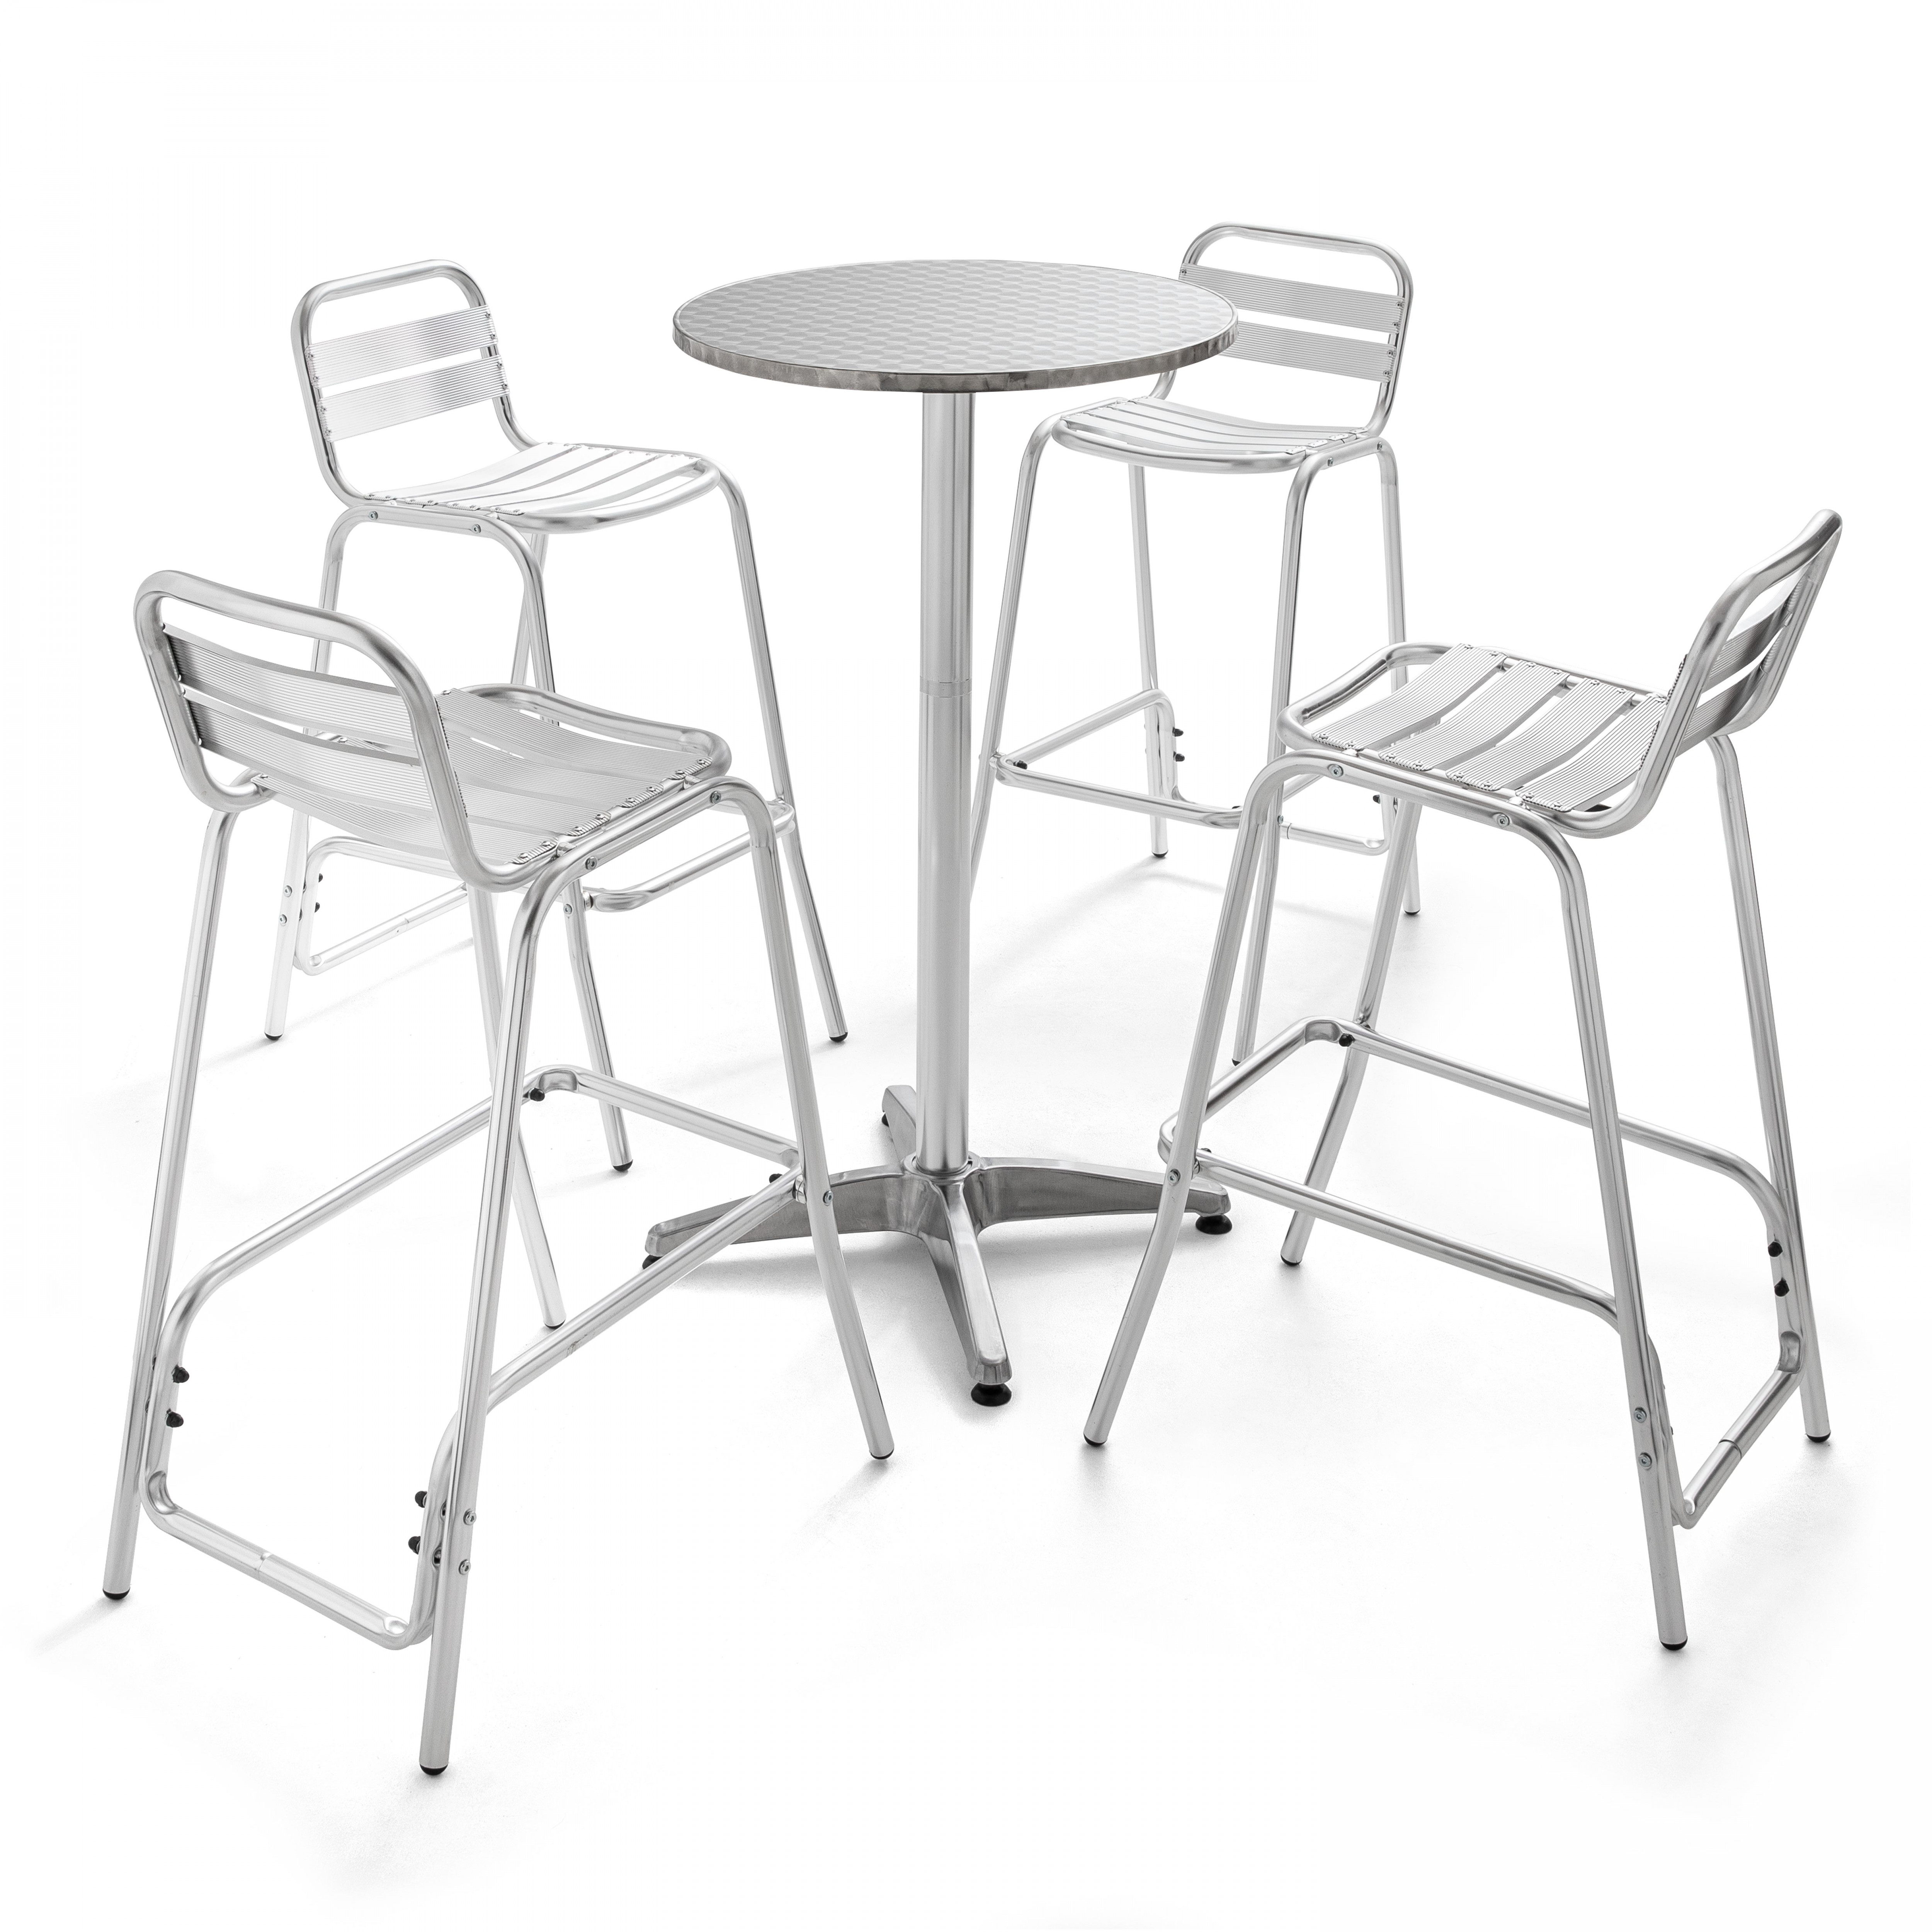 Table de jardin haute en aluminium + 4 chaises hautes